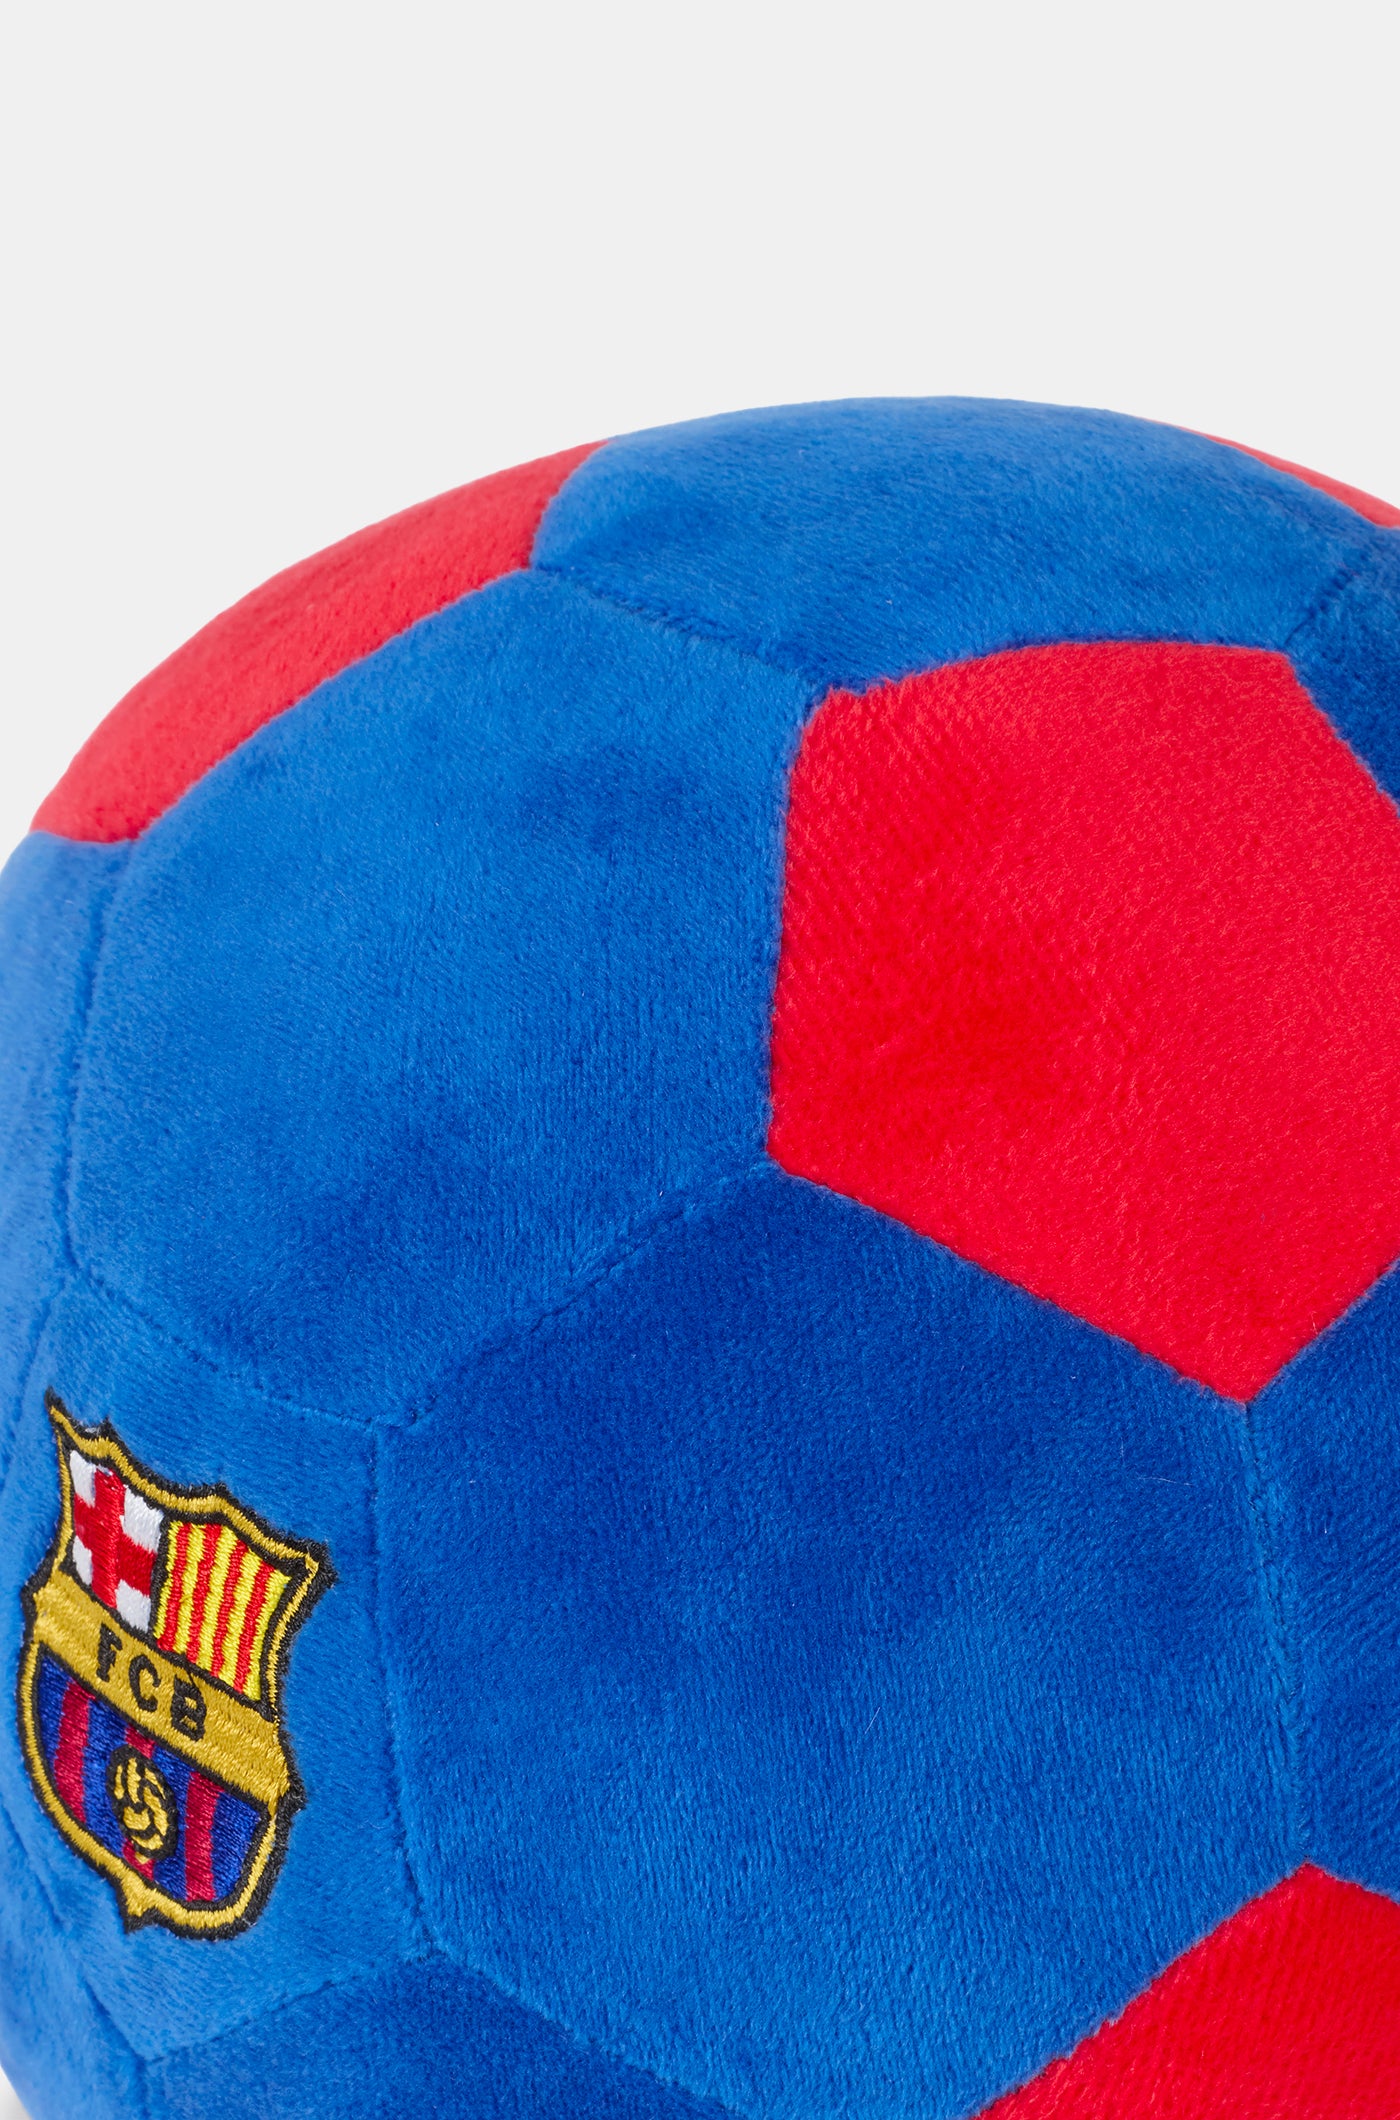 Cresty teddy ball- FC Barcelona